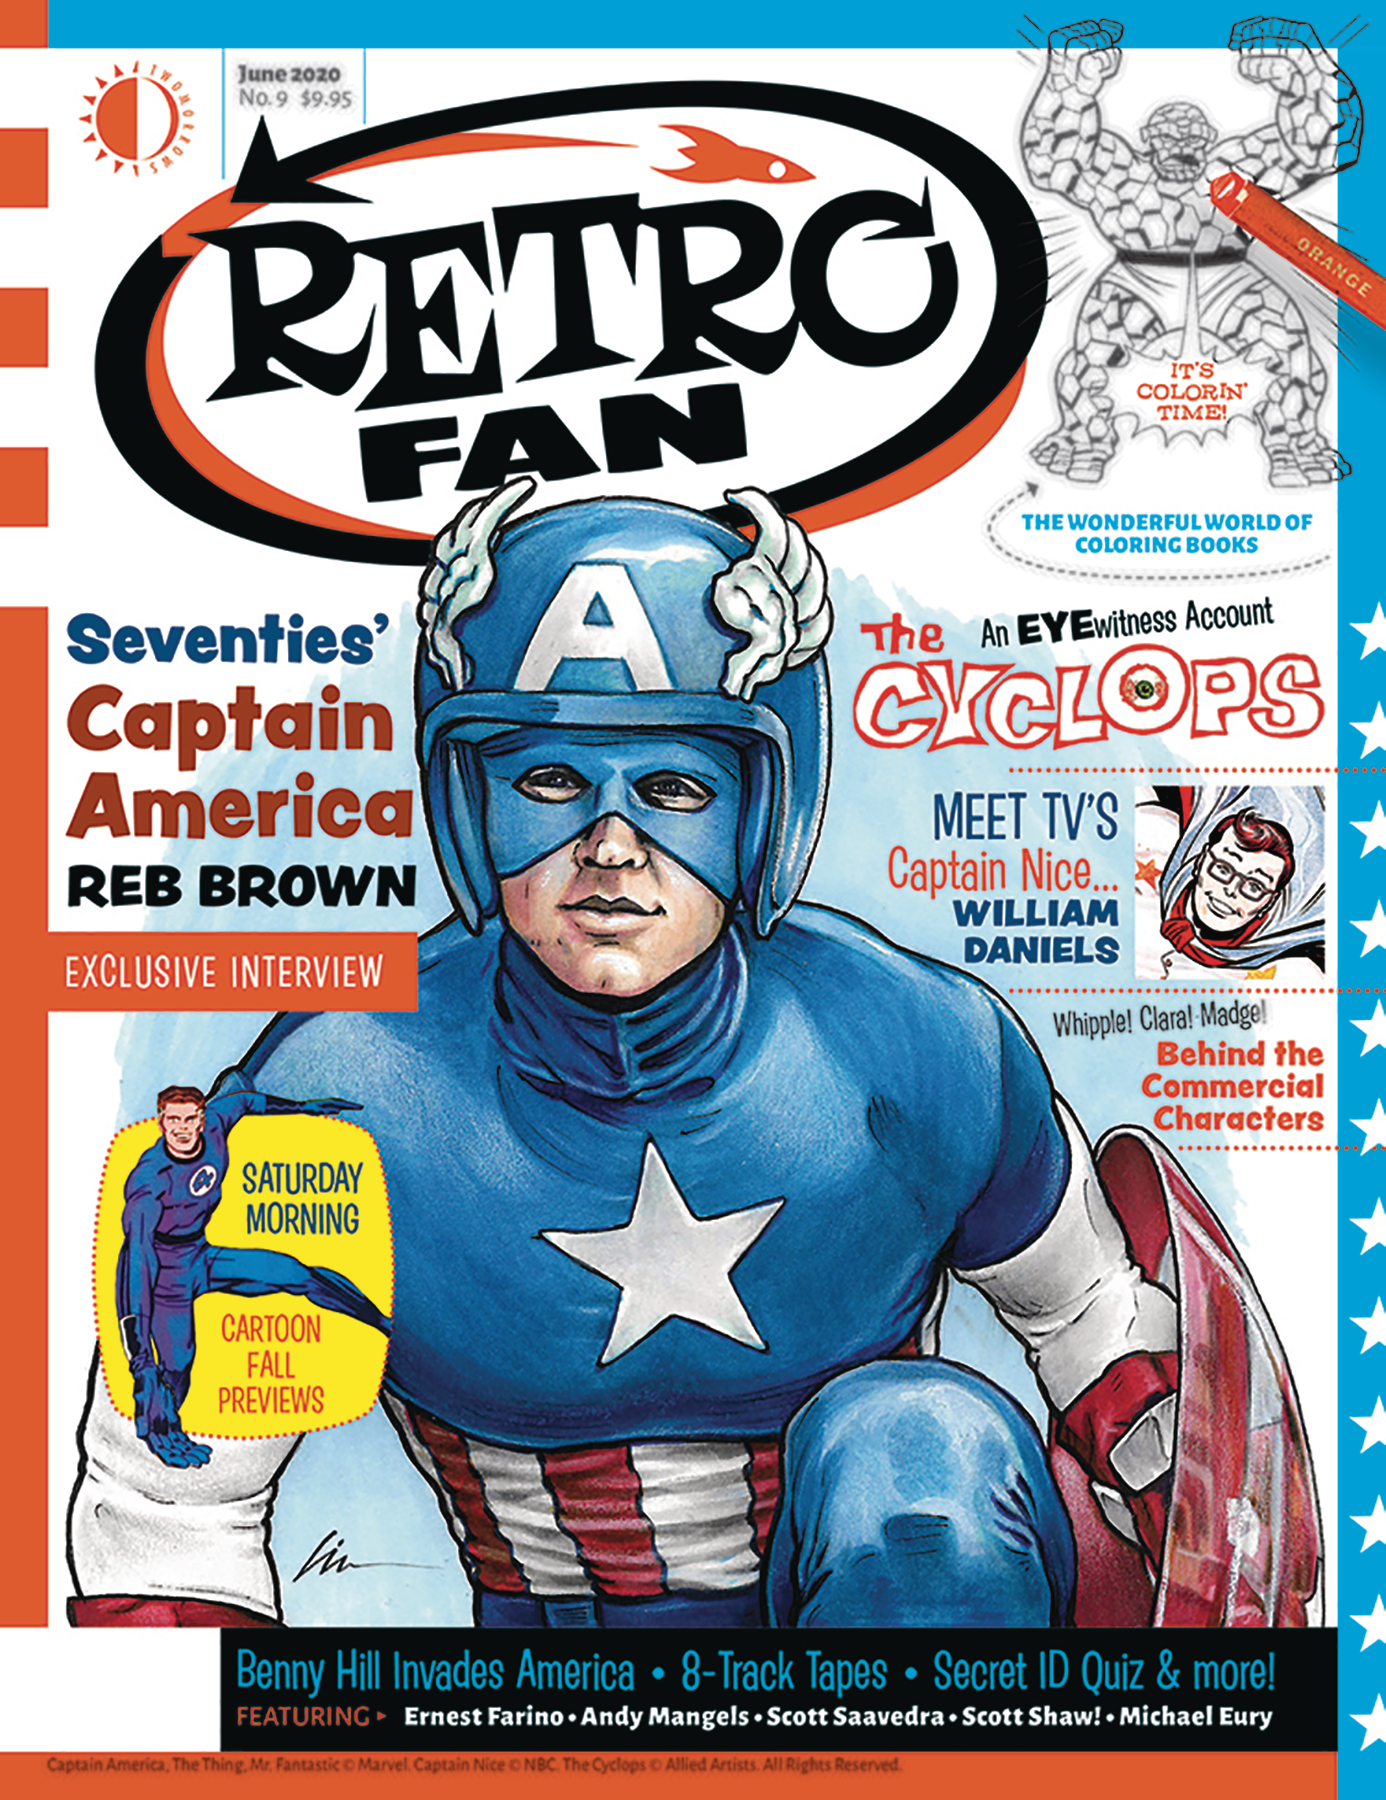 Retrofan Magazine #9